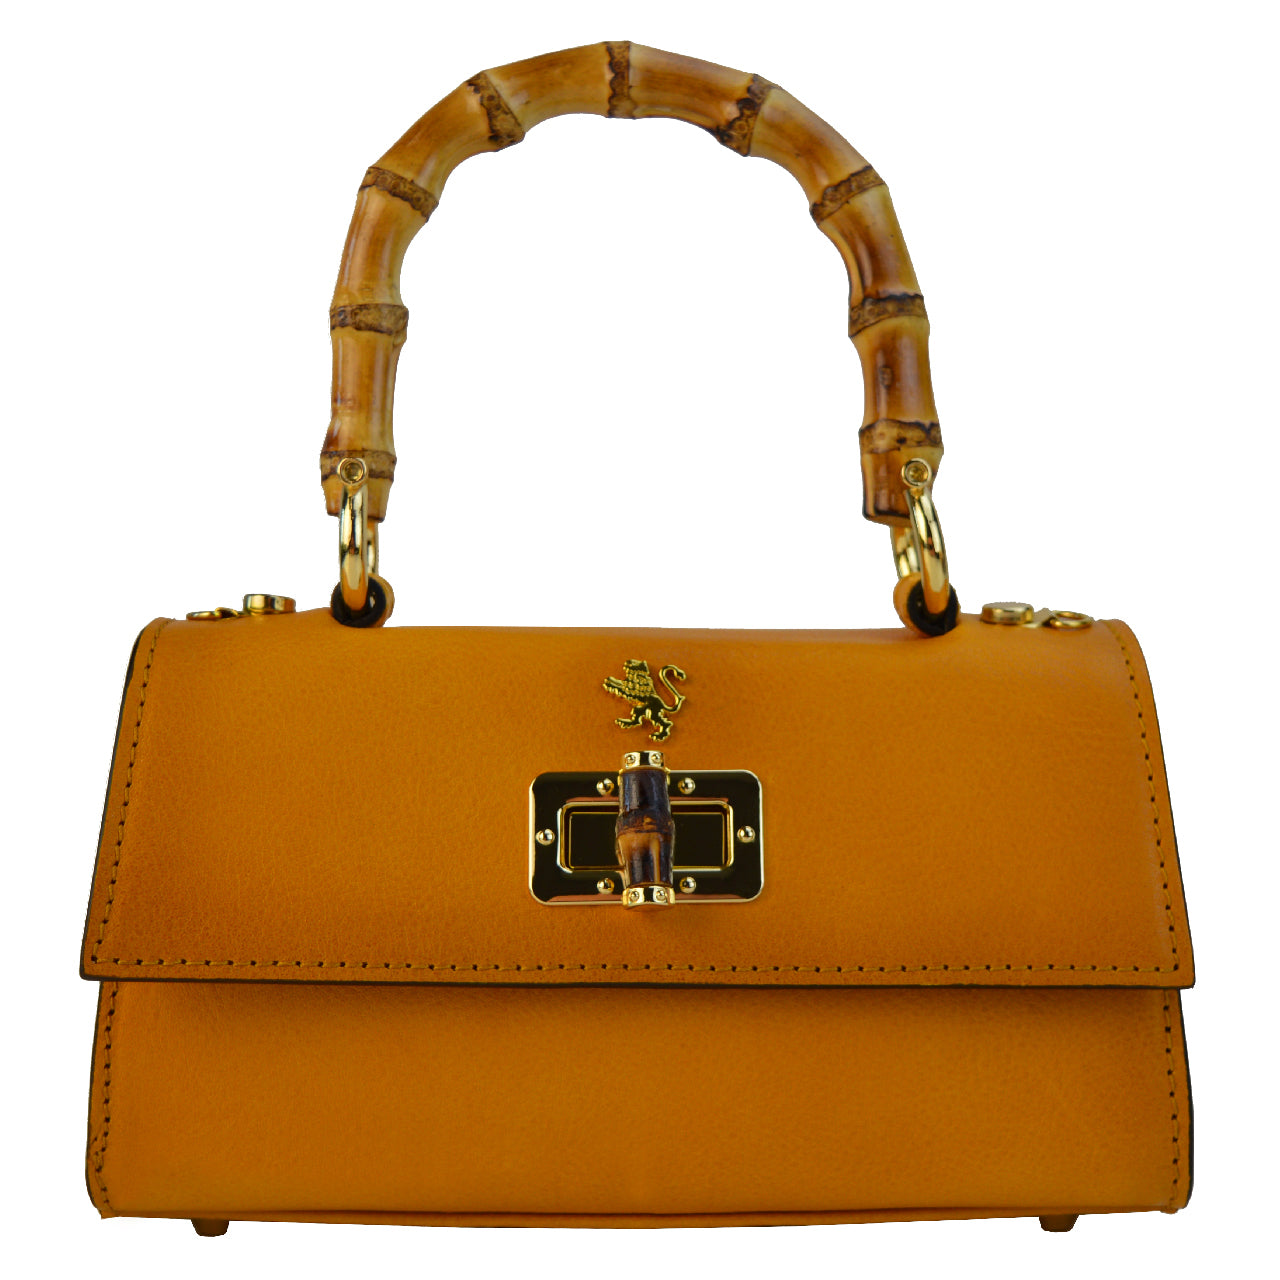 Pratesi Castalia Lady Bag in genuine Italian leather - Castalia Mustard